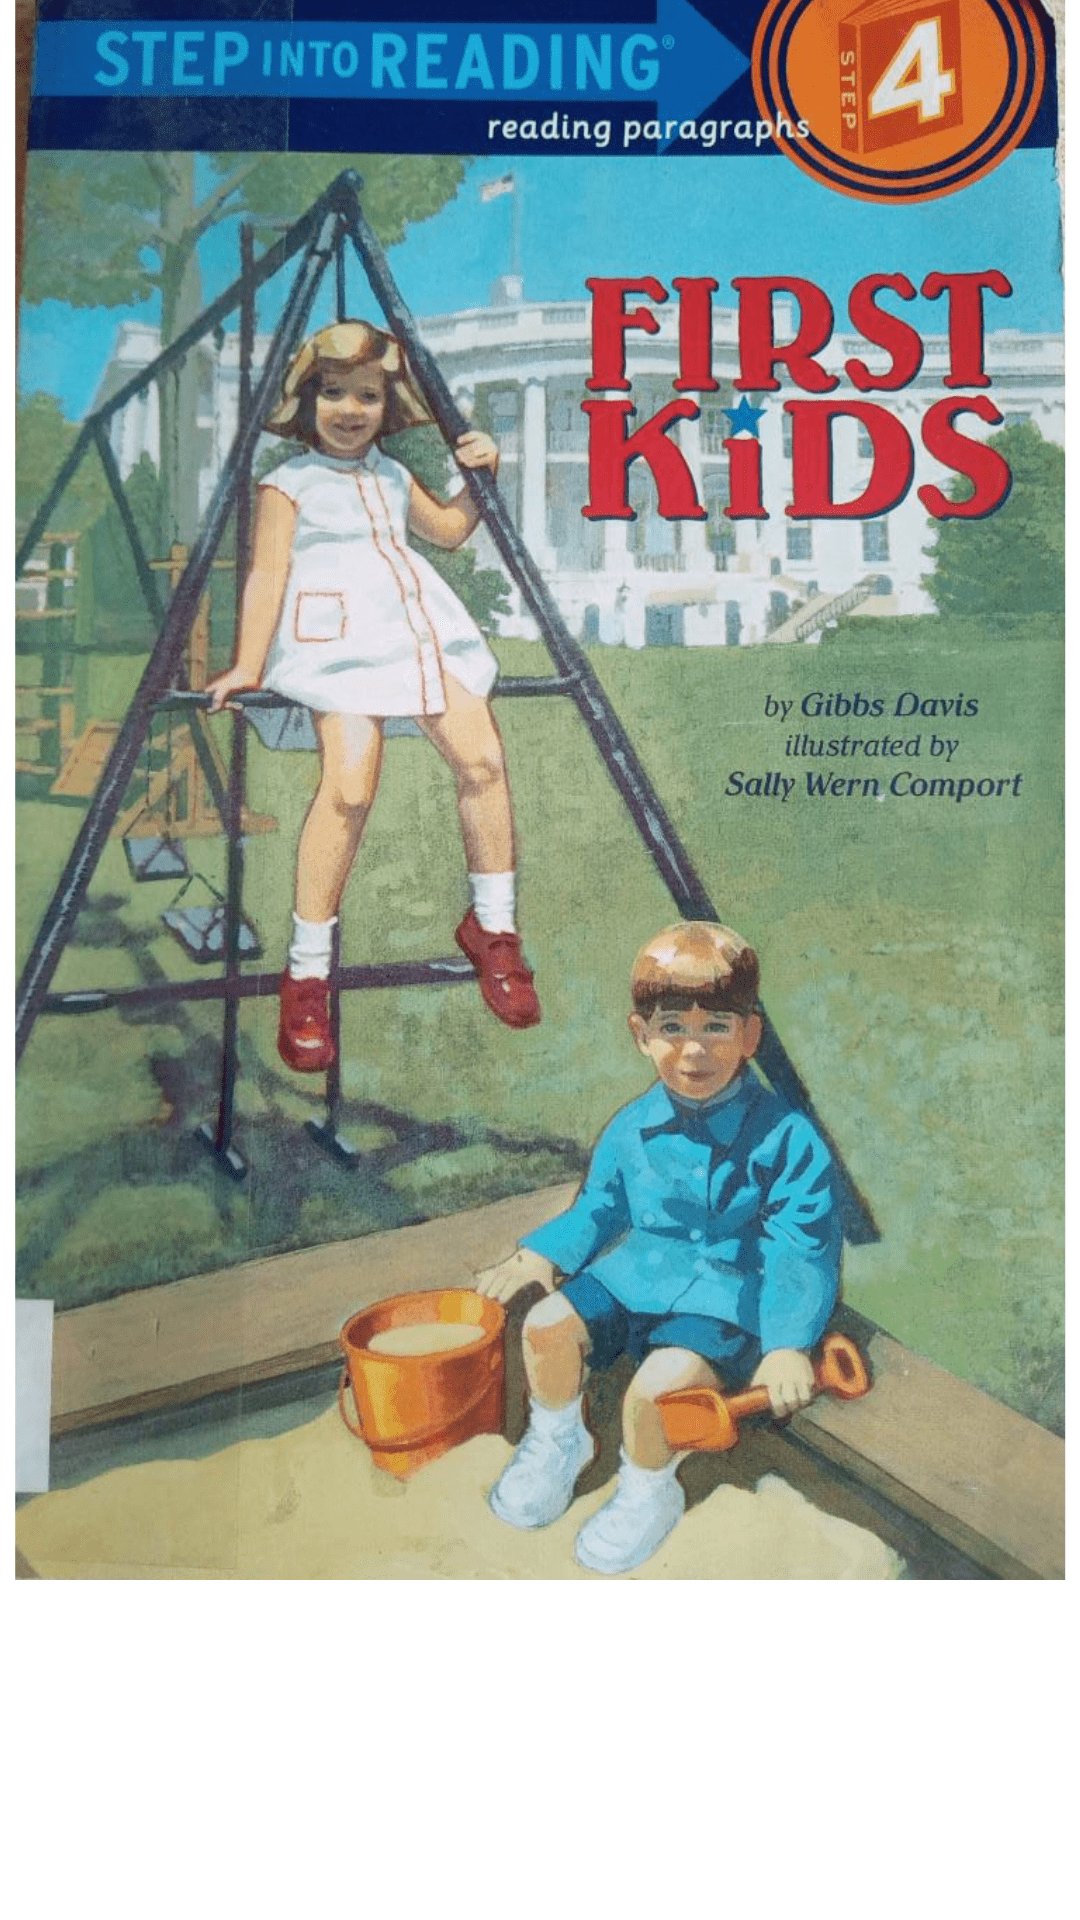 First Kids by Gibbs Davis